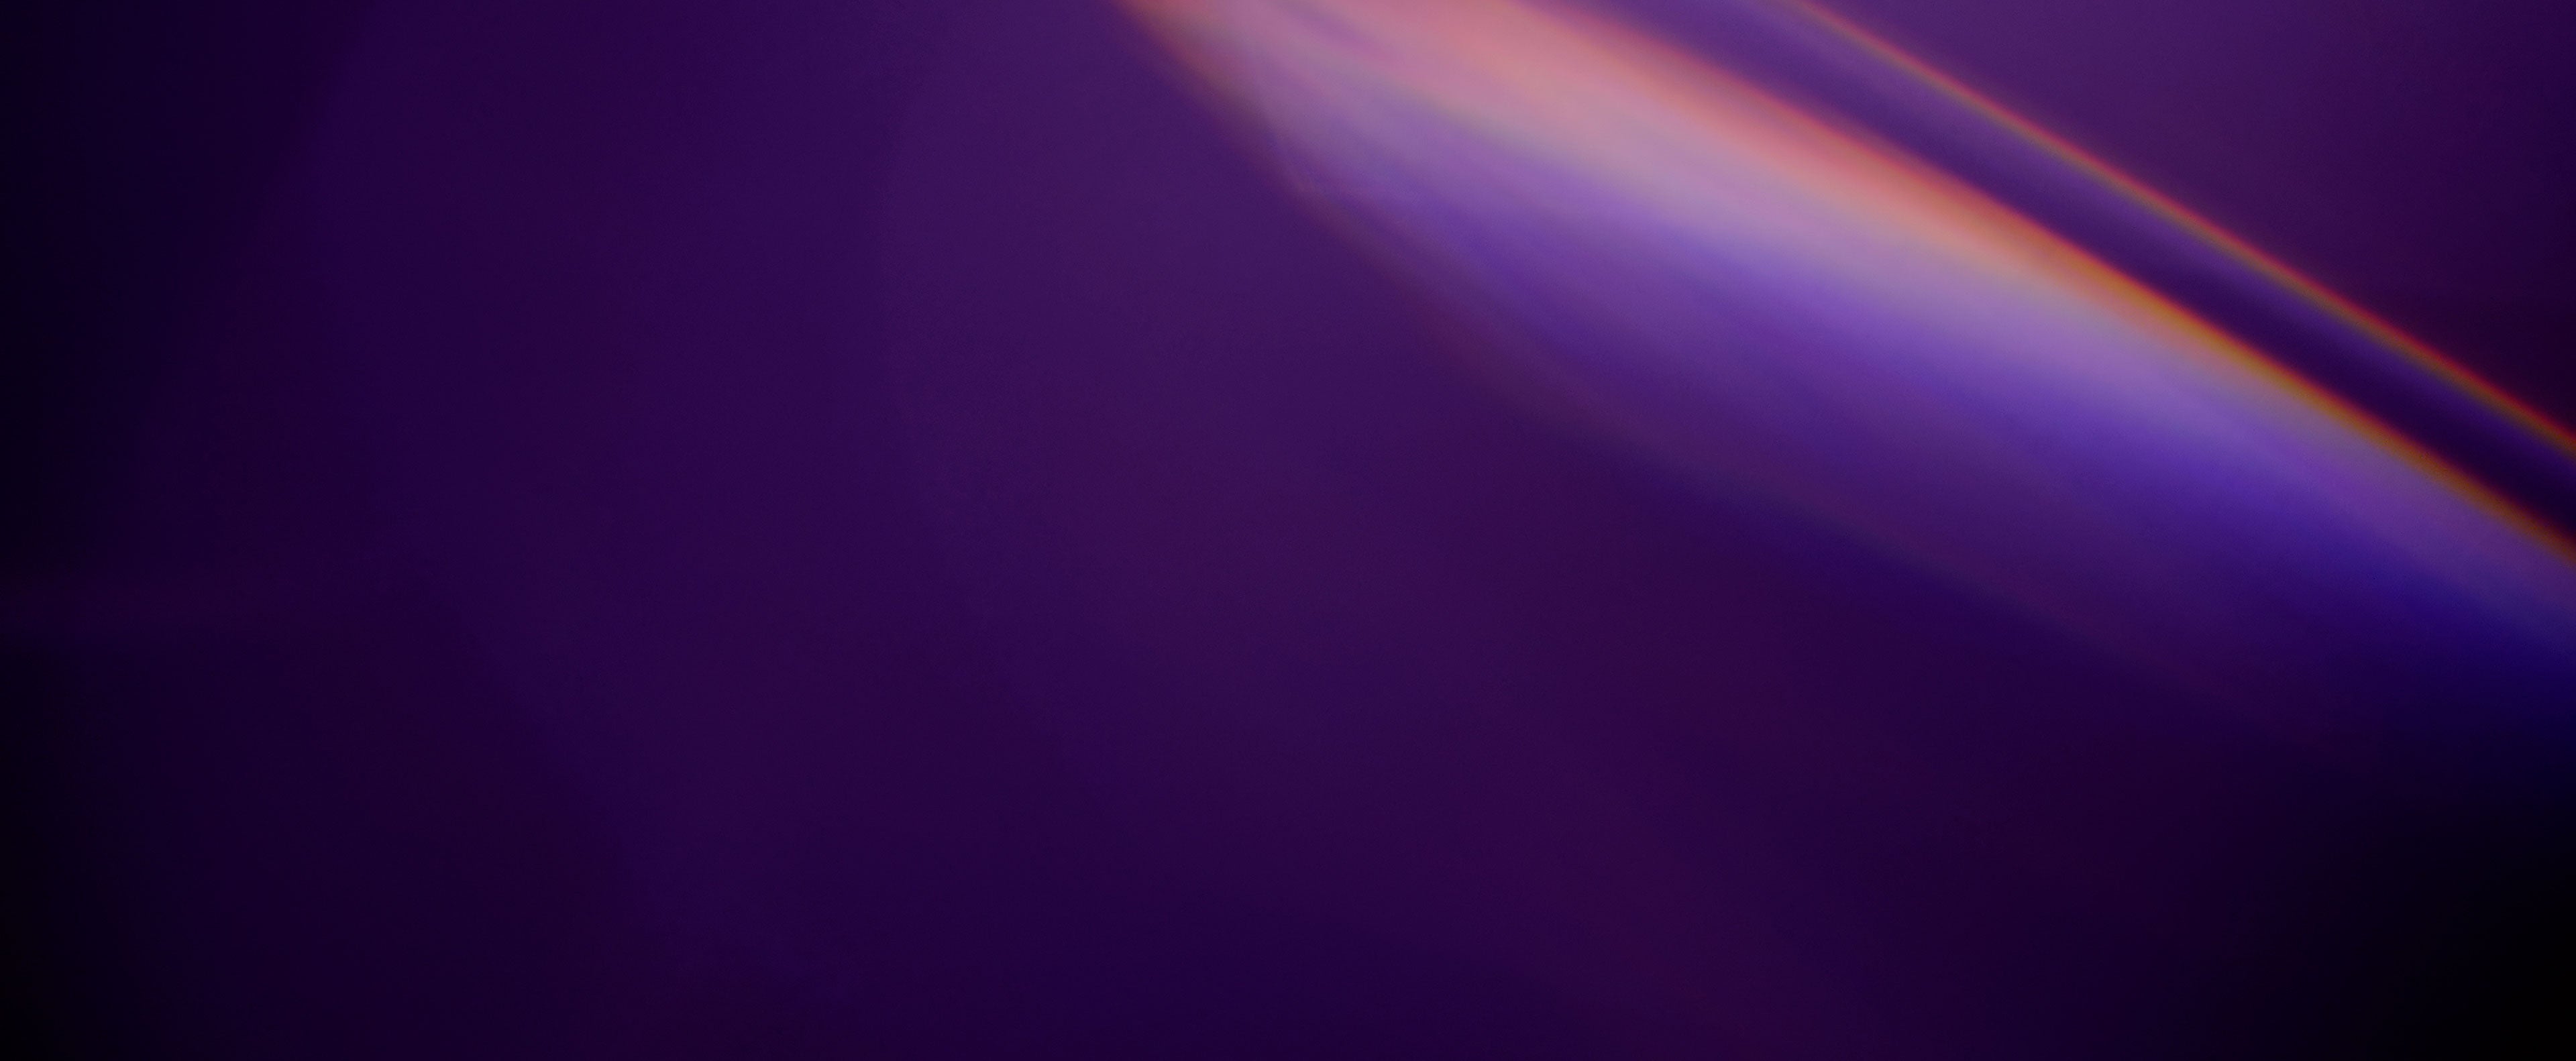 video background purple